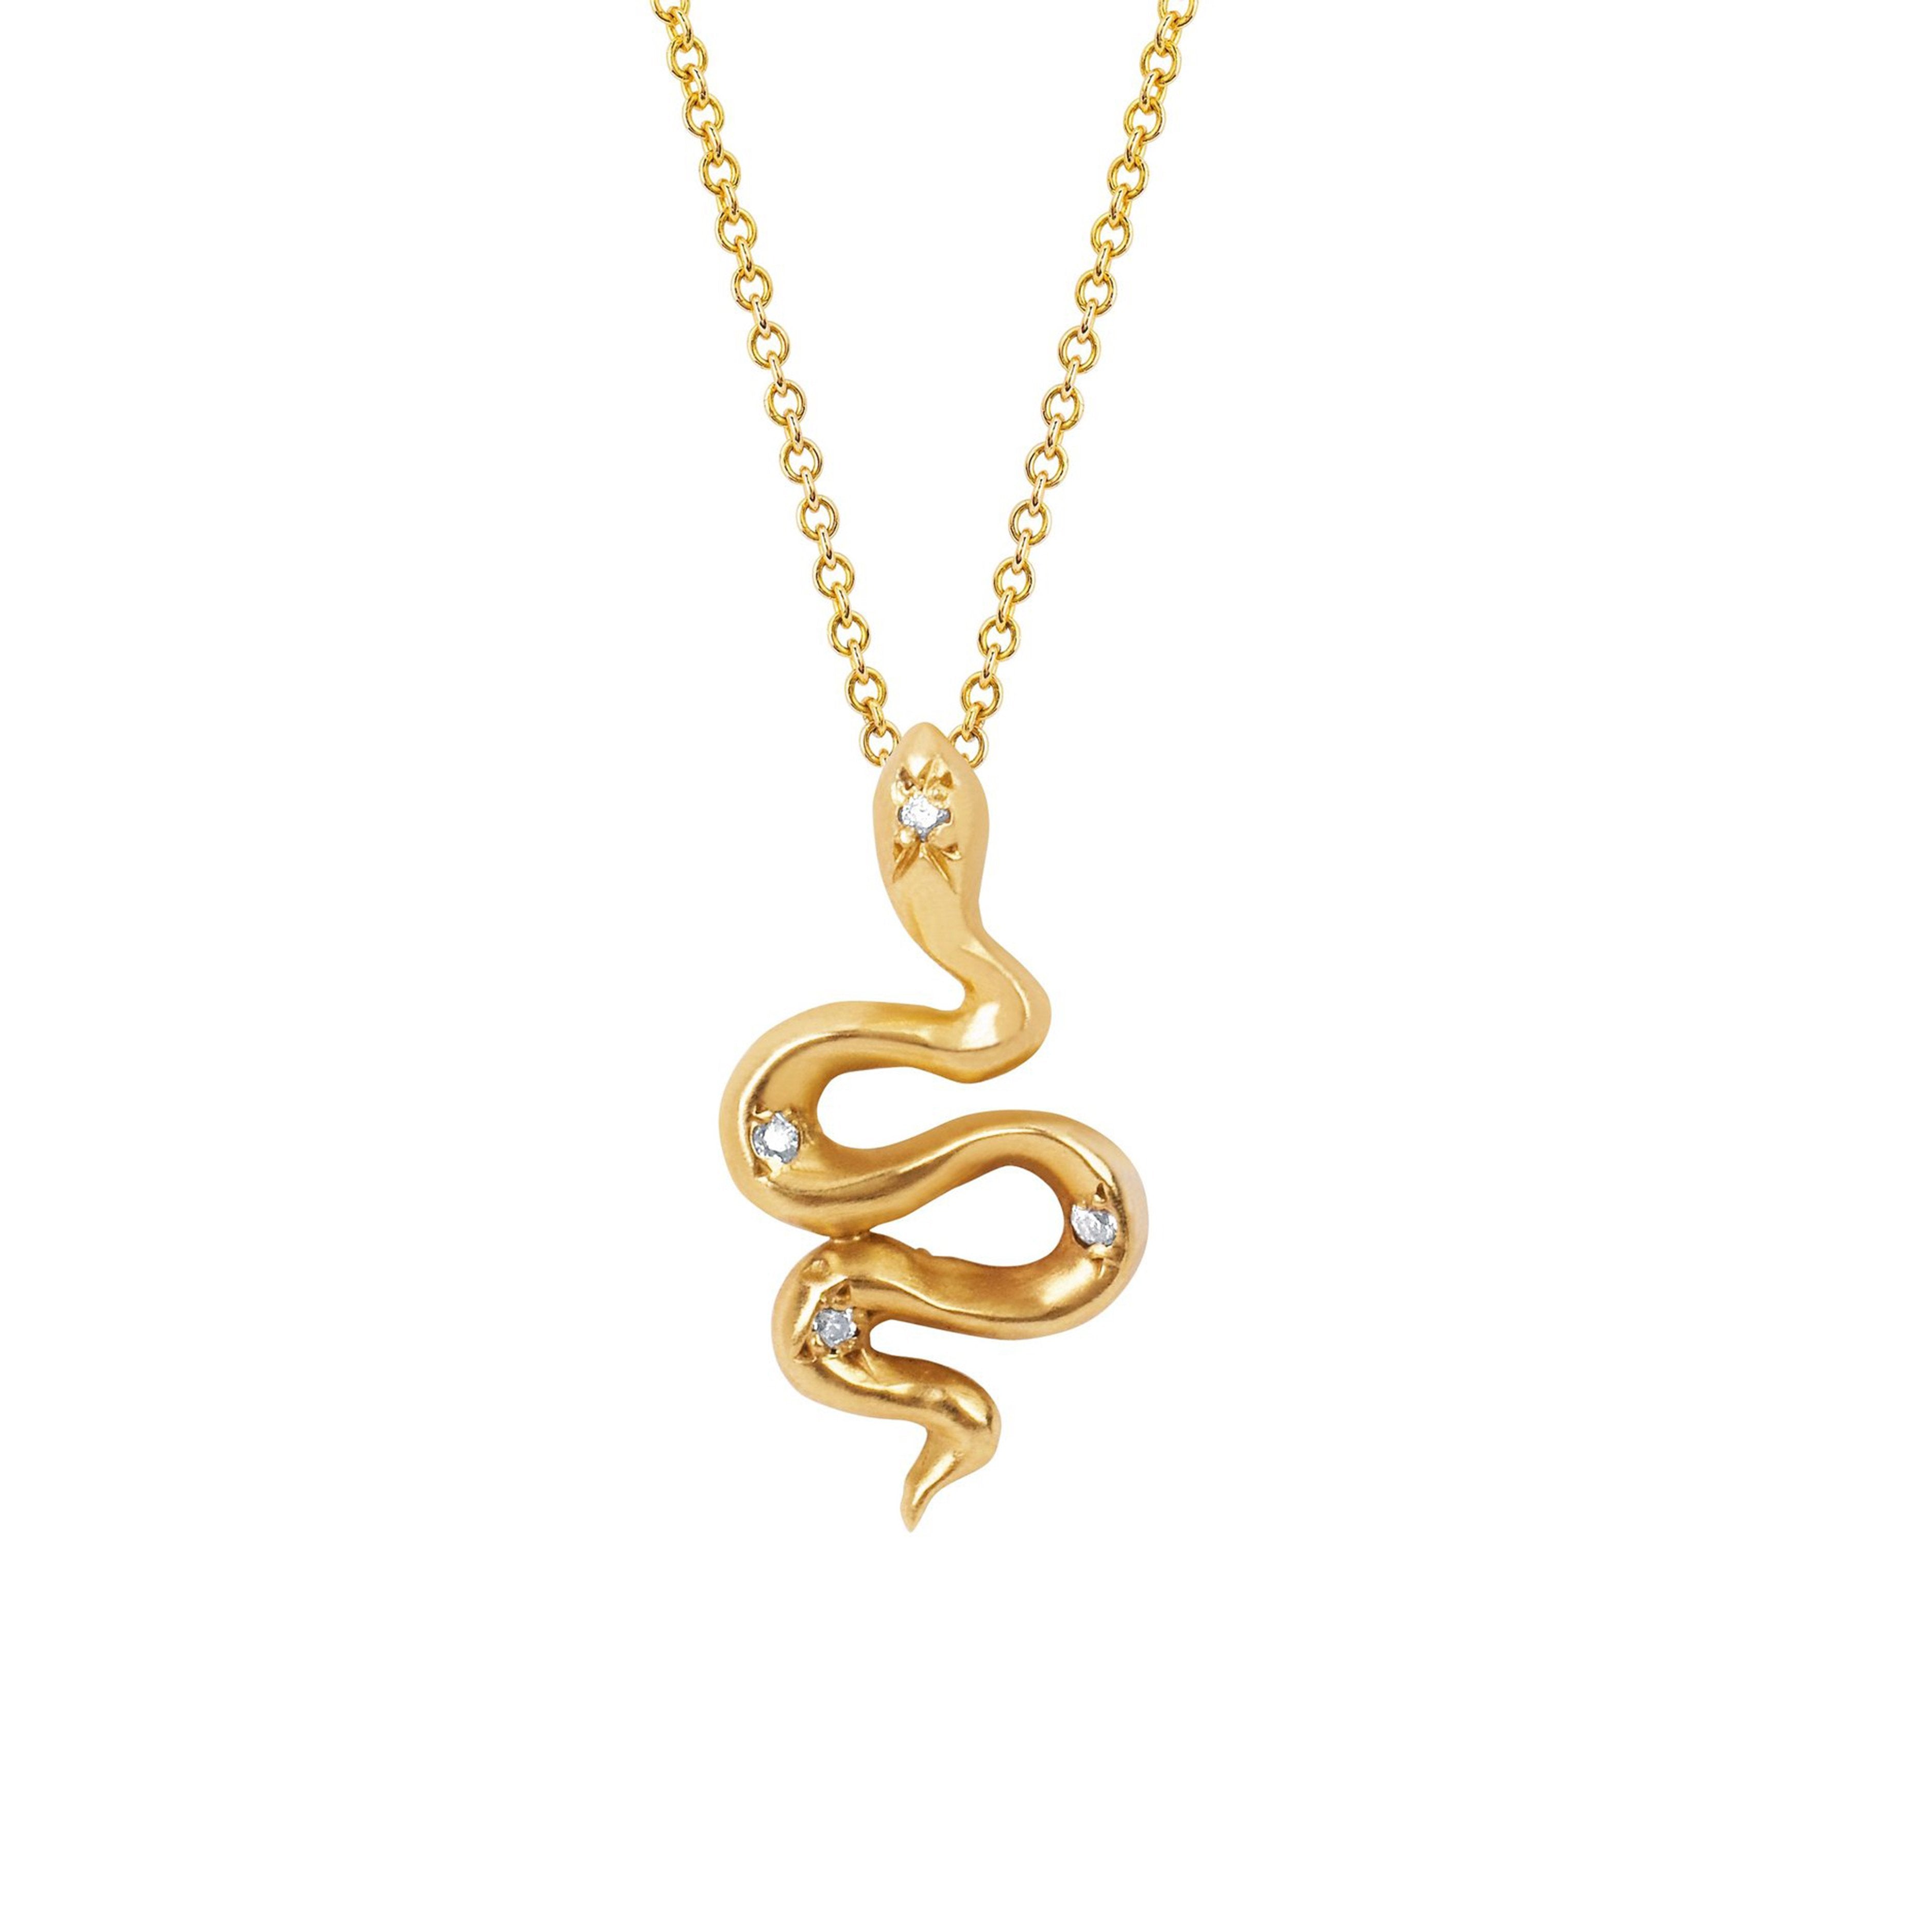 A Legendary Icon. The Yellow Diamond Hypnosis Serpenti necklace